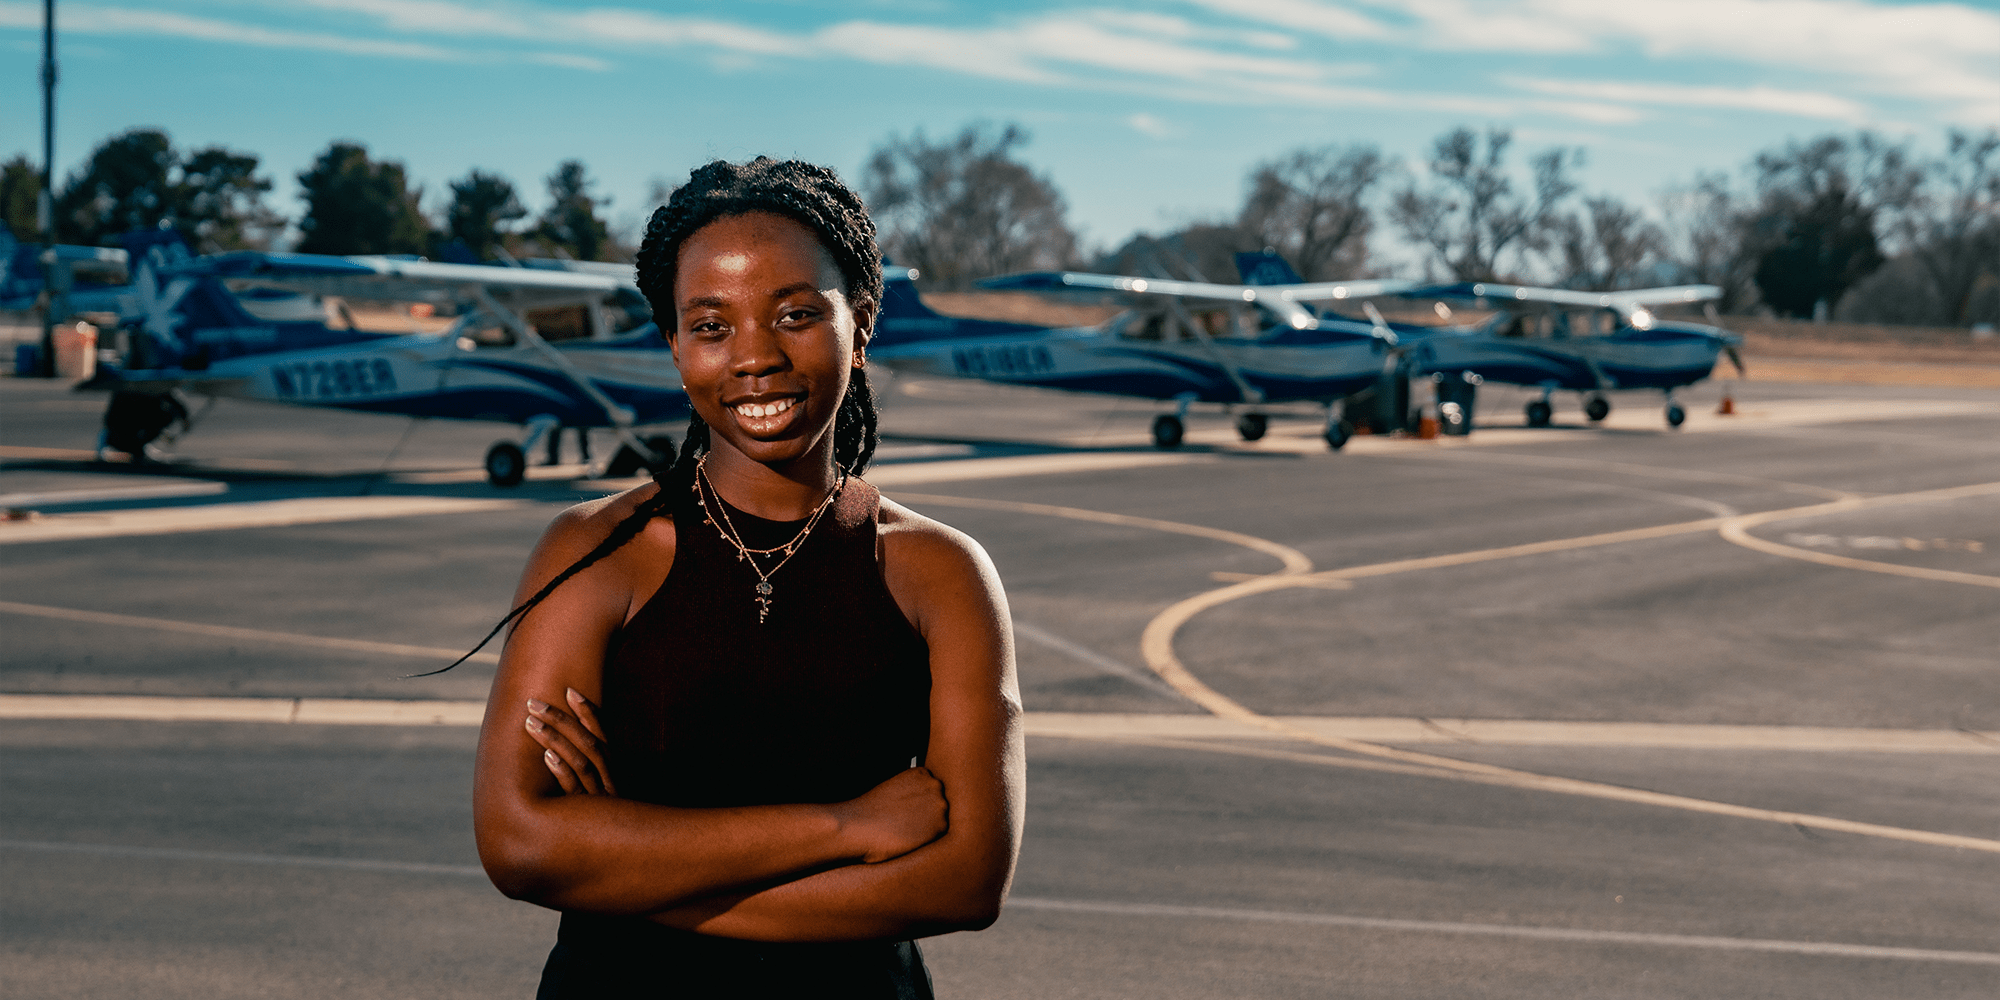 Megan Yaa Amoako at Embry-Riddle Aeronautical University’s Flight Line in Prescott, Arizona. (Photo: Embry-Riddle / Connor McShane)